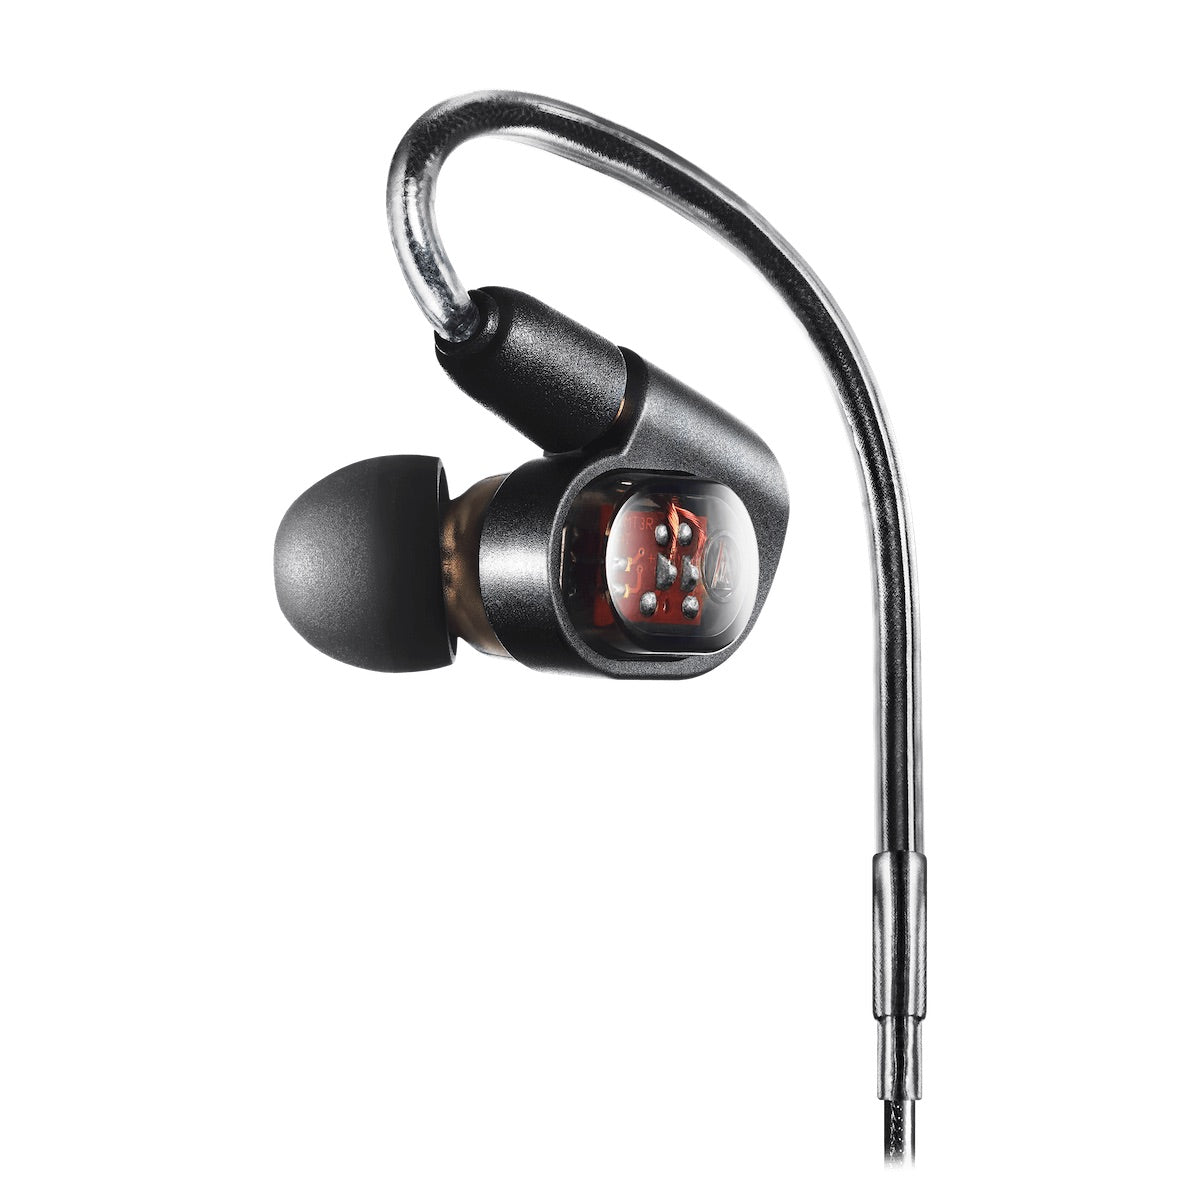 Audio-Technica ATH-E70 - Professional In-Ear Monitor Headphones, closeup